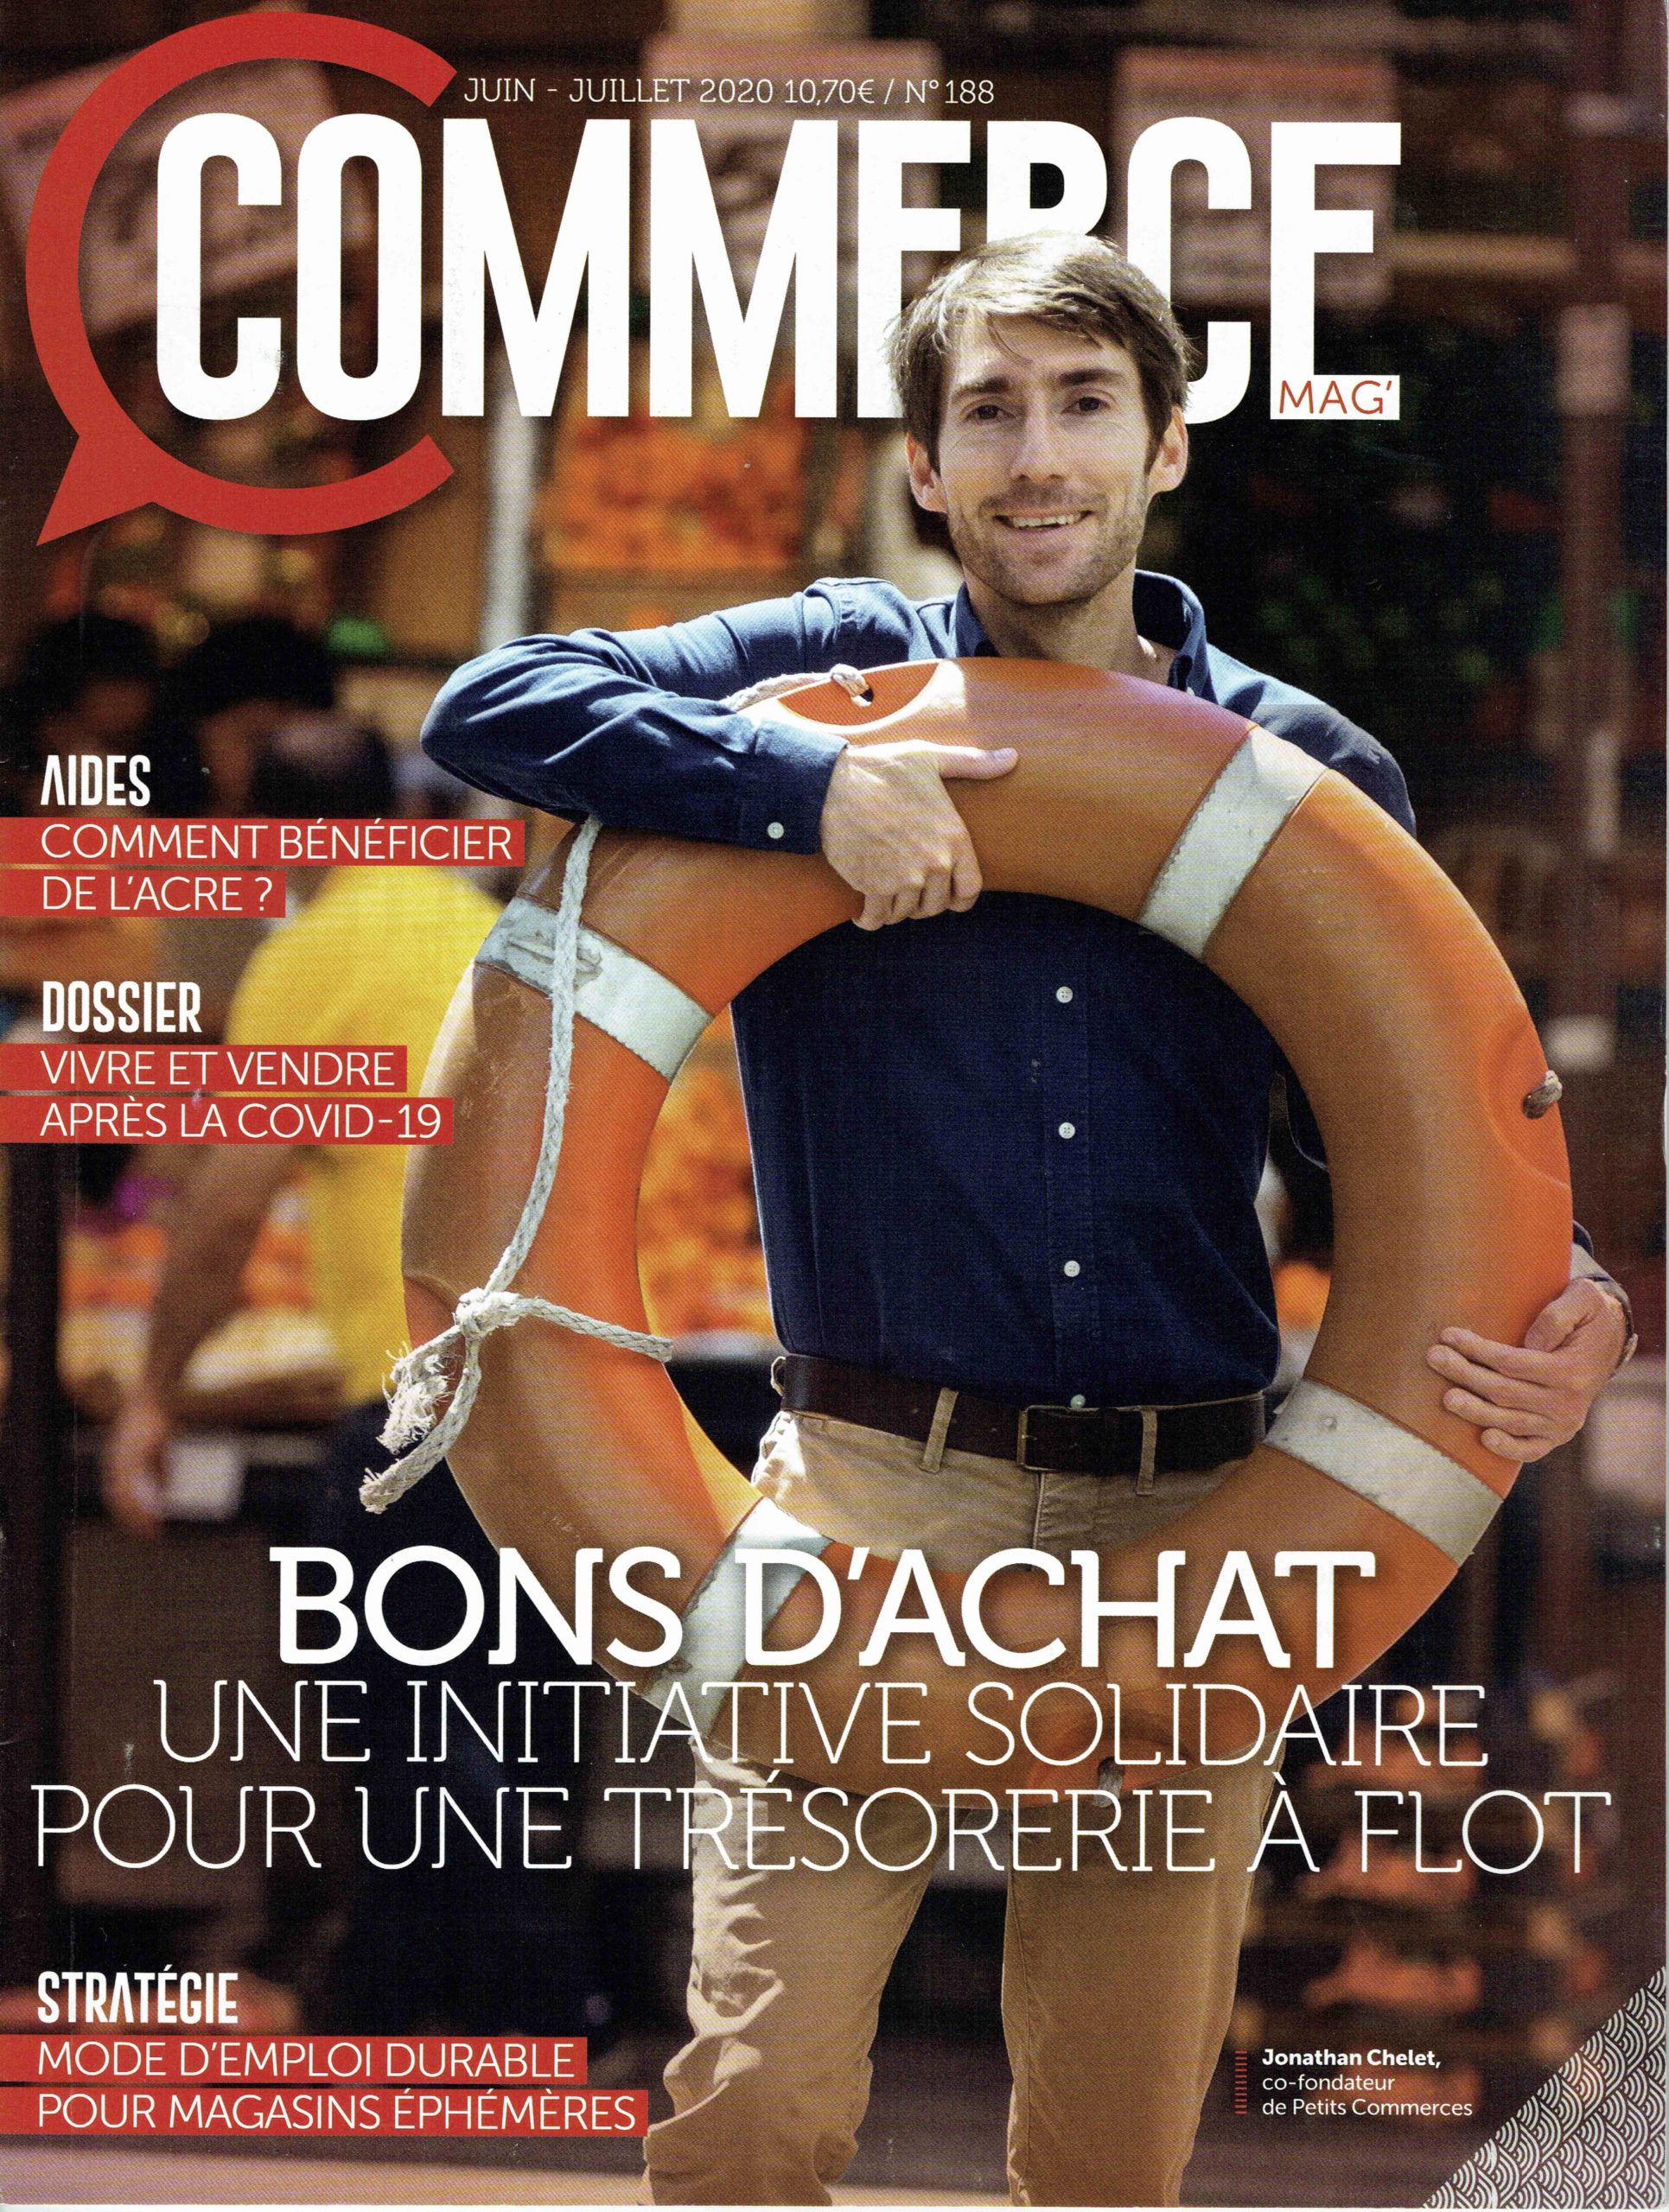 Jonathan Chelet Petitscommerces Couverture Commerce Magazine Petitscommerces.fr